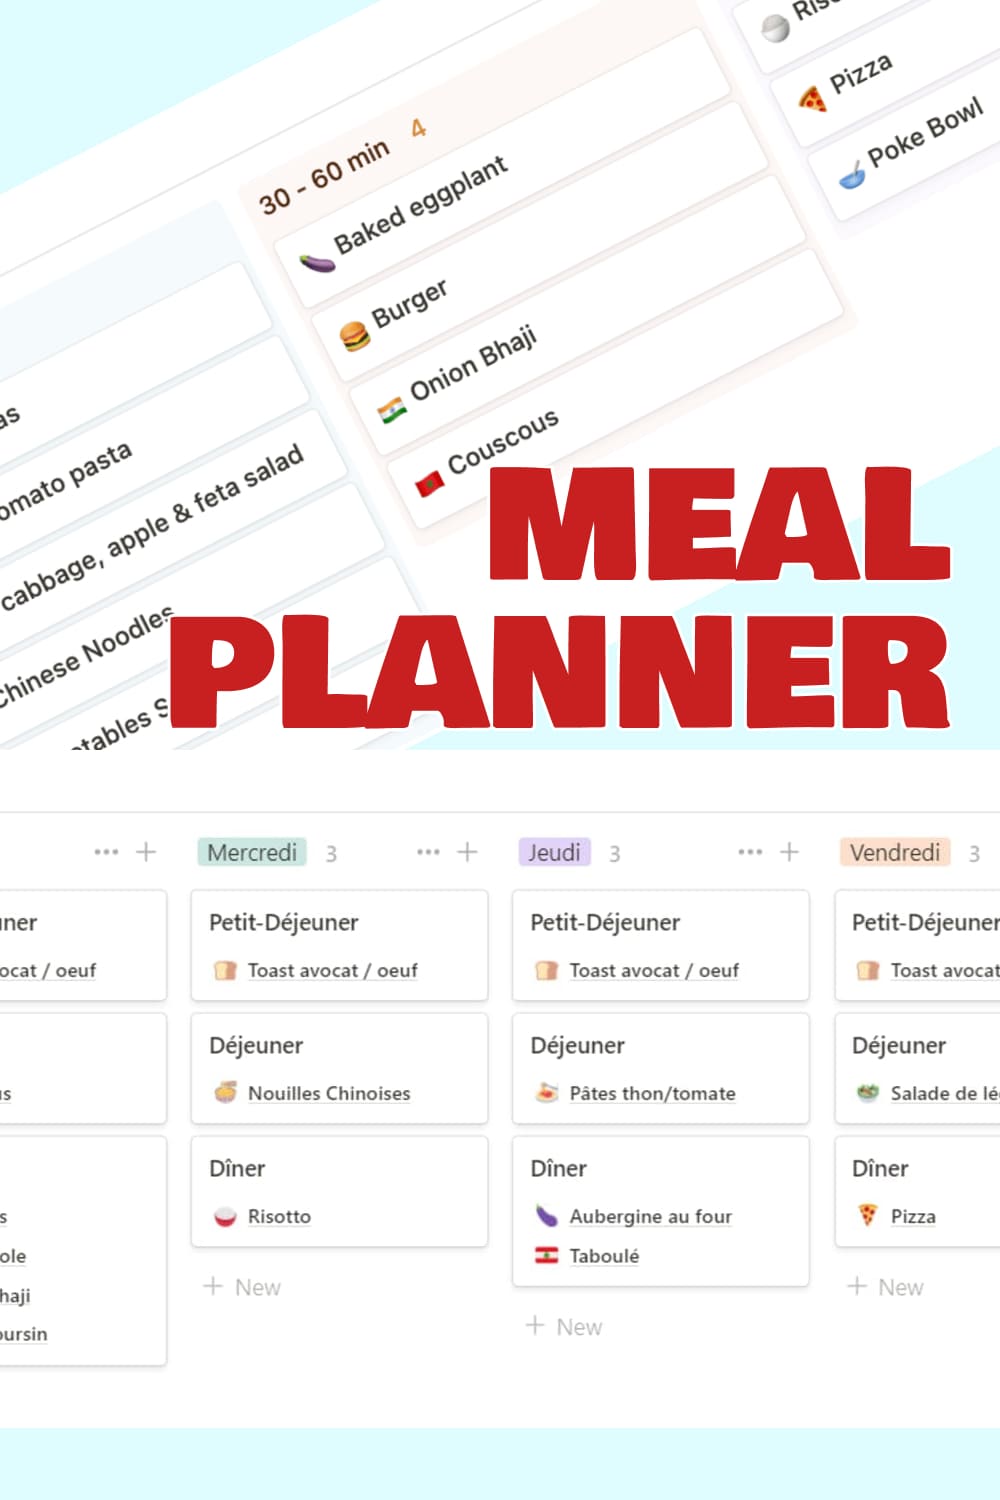 Meal Planner + Groceries List Generator.